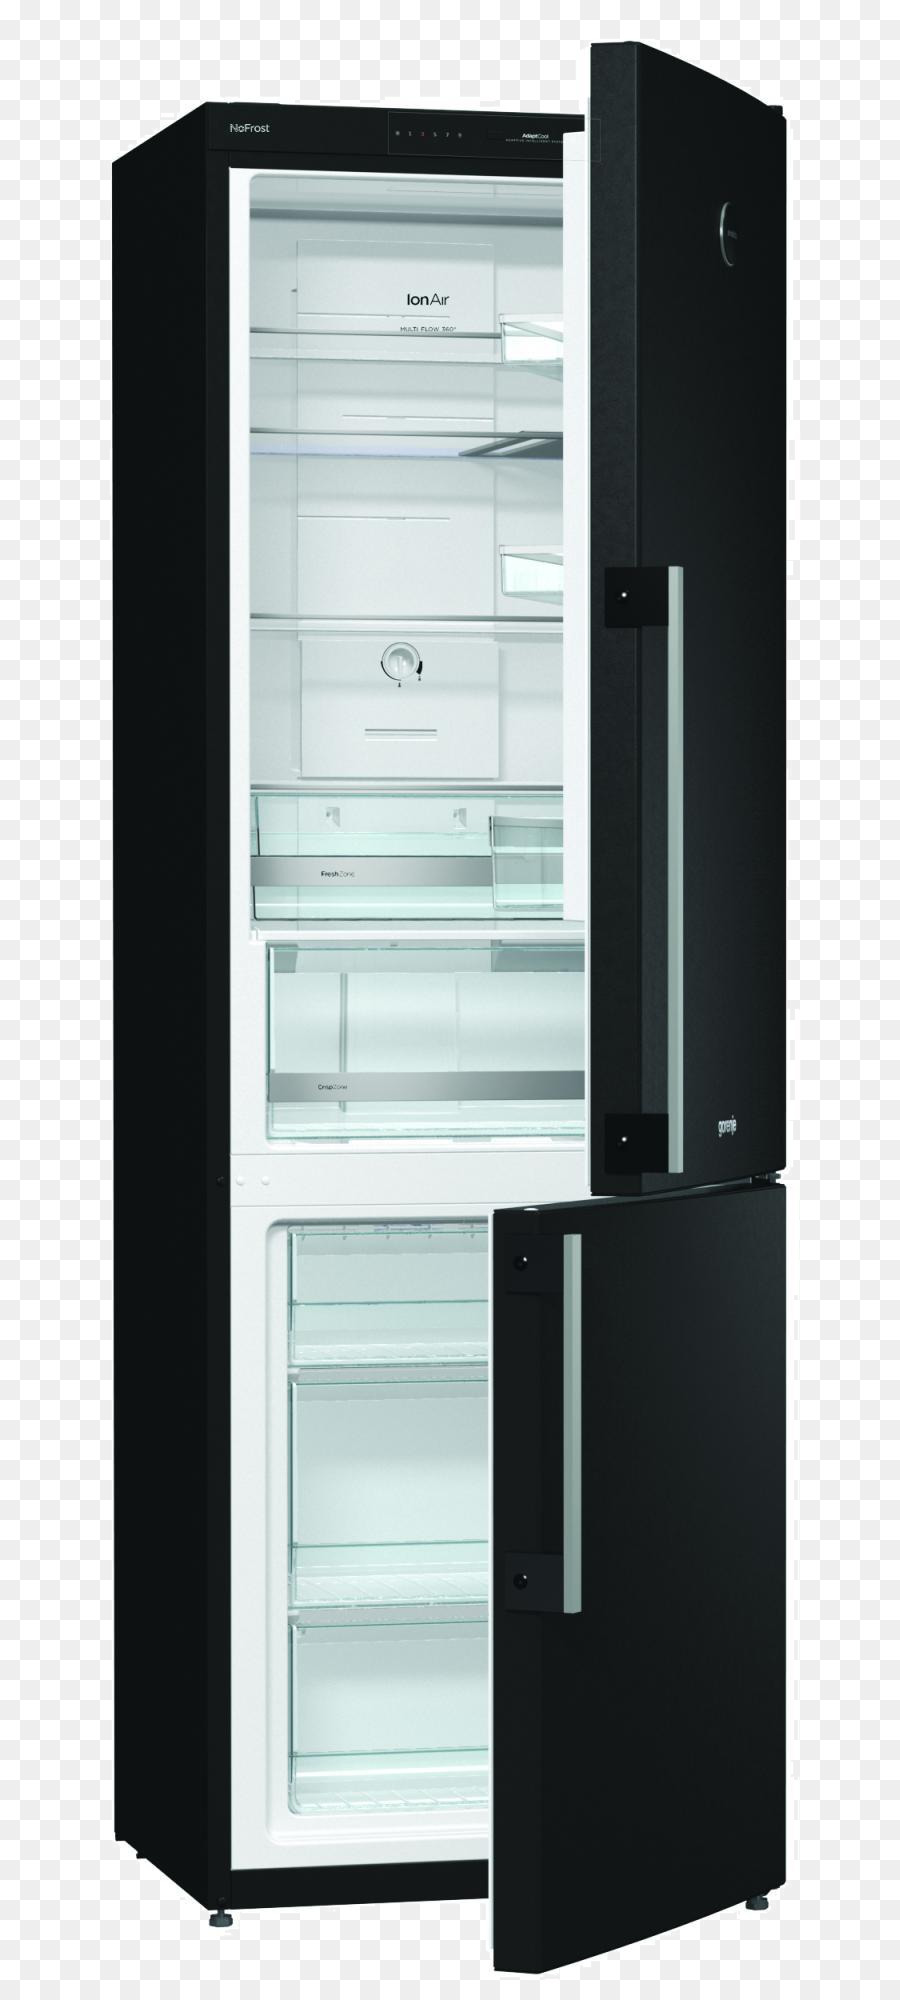 Frigorifero Congelatori Gorenje elettrodomestico Unione Europea etichetta energetica - frigorifero